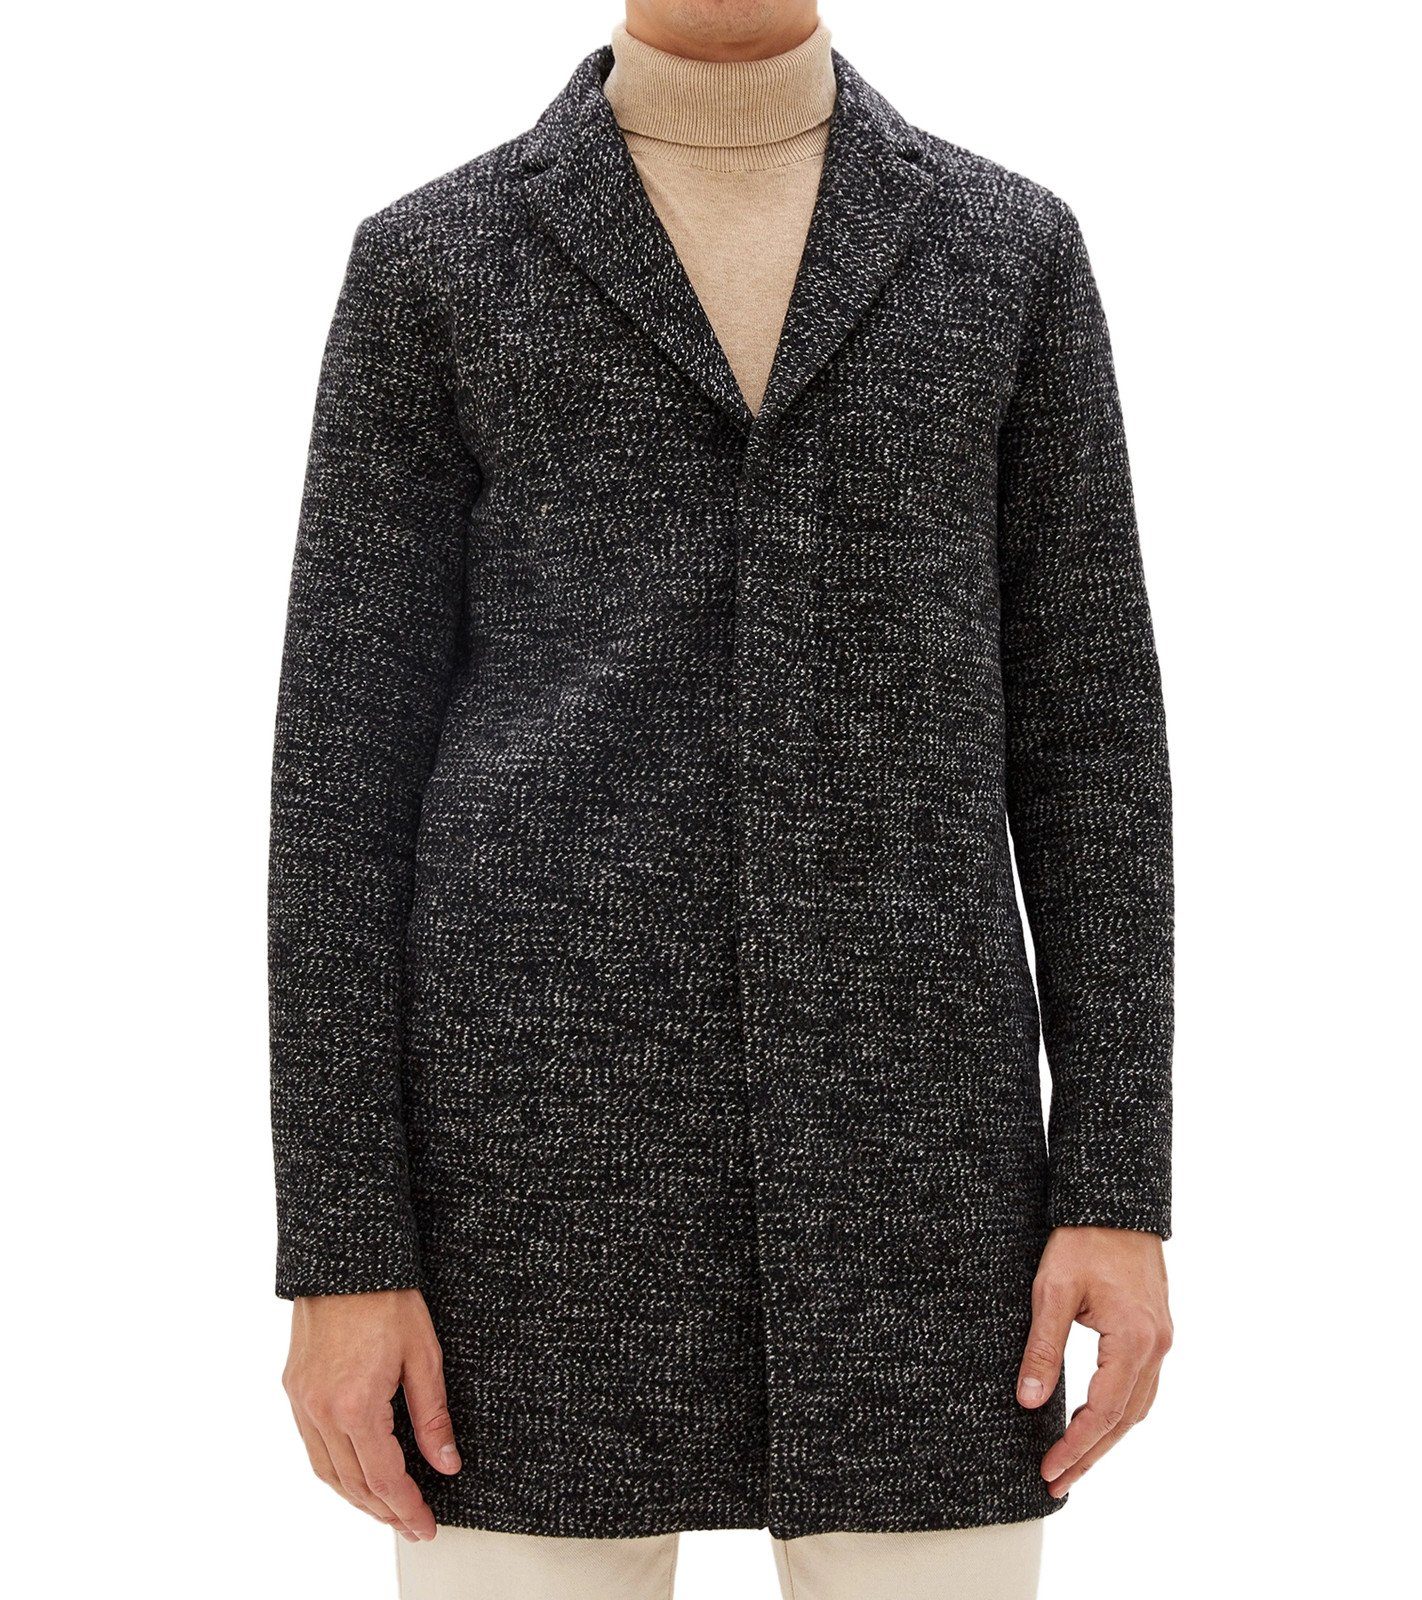 SELECTED HOMME Wintermantel »SELECTED HOMME Herren Woll-Mantel klassischer  Winter-Mantel aus recycelter Wolle Kurz-Mantel Grau« online kaufen | OTTO